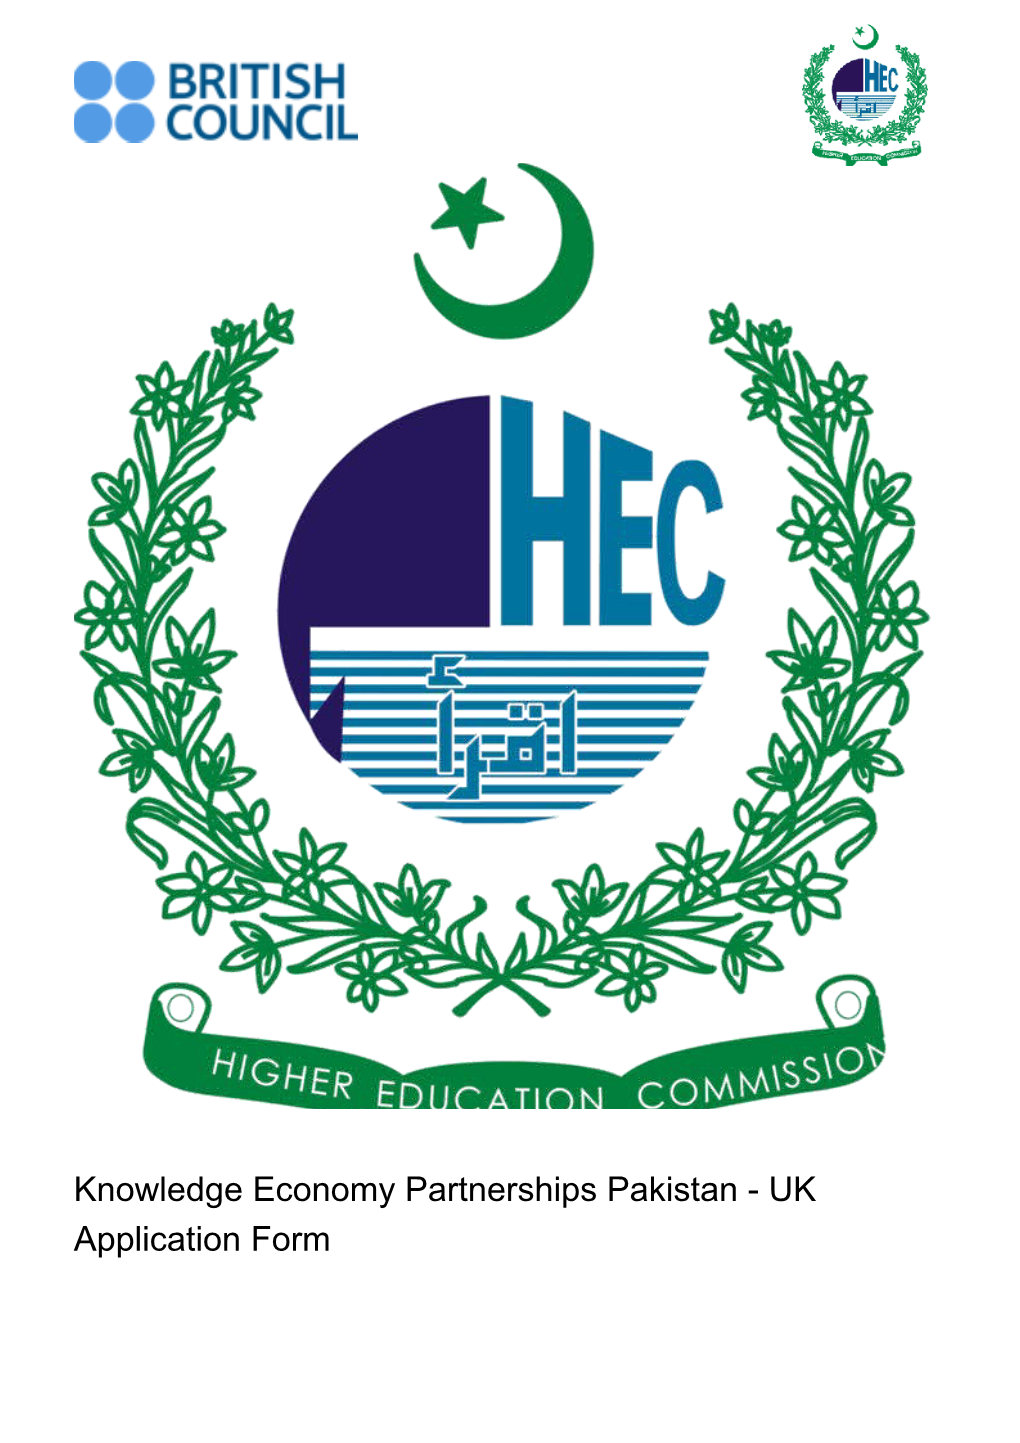 Knowledge Economypartnershipspakistan - UK